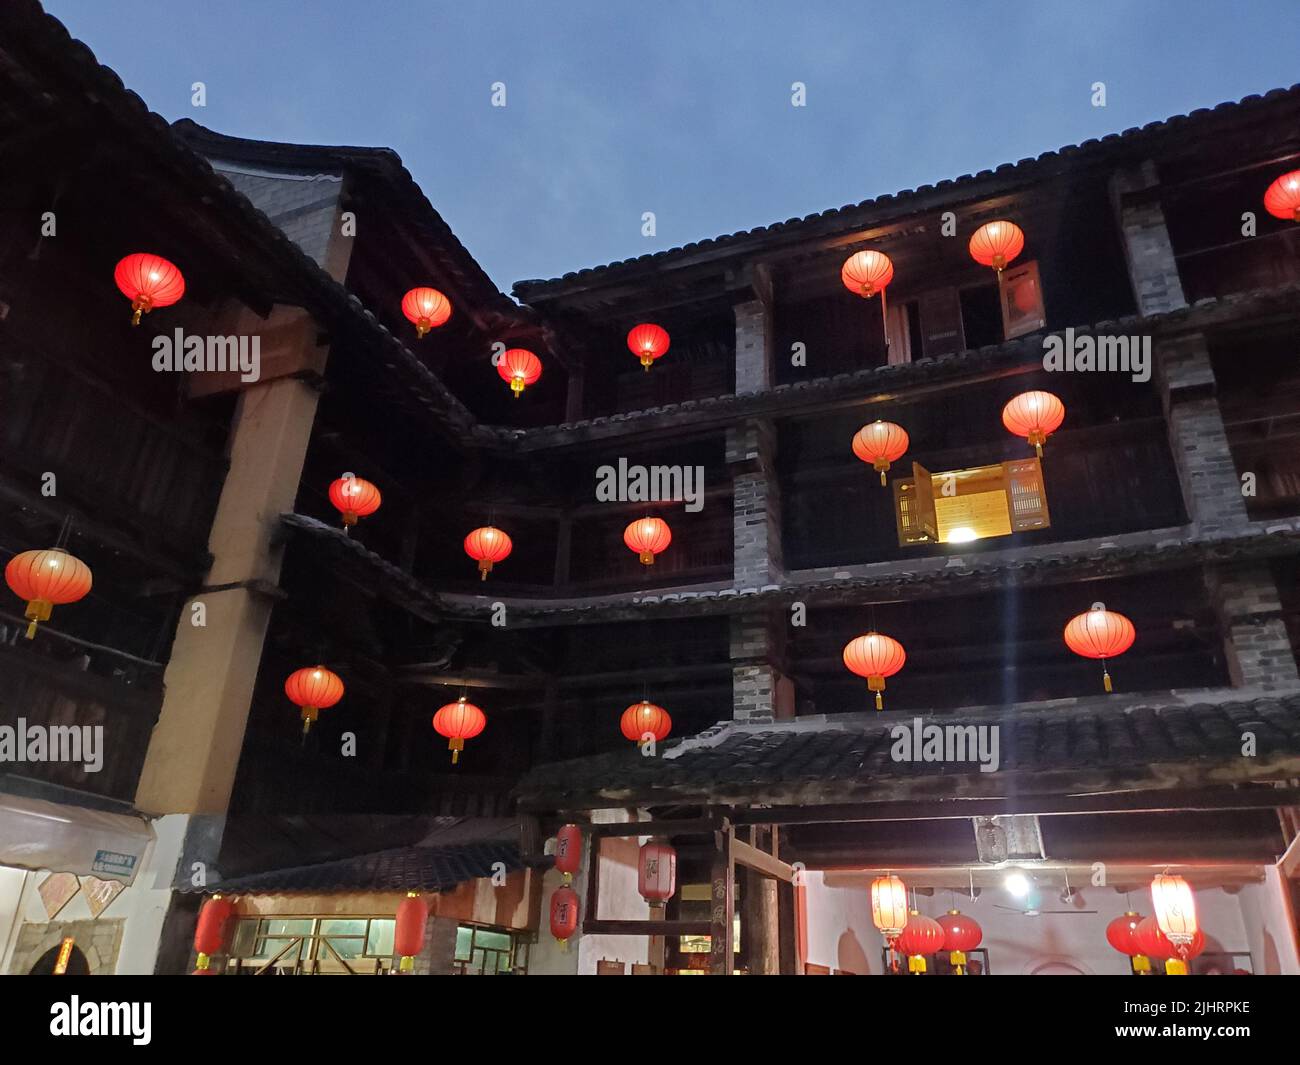 The traditional Chinese style lanterns inside Fujian tulou rectangular building in Fujian, China Stock Photo